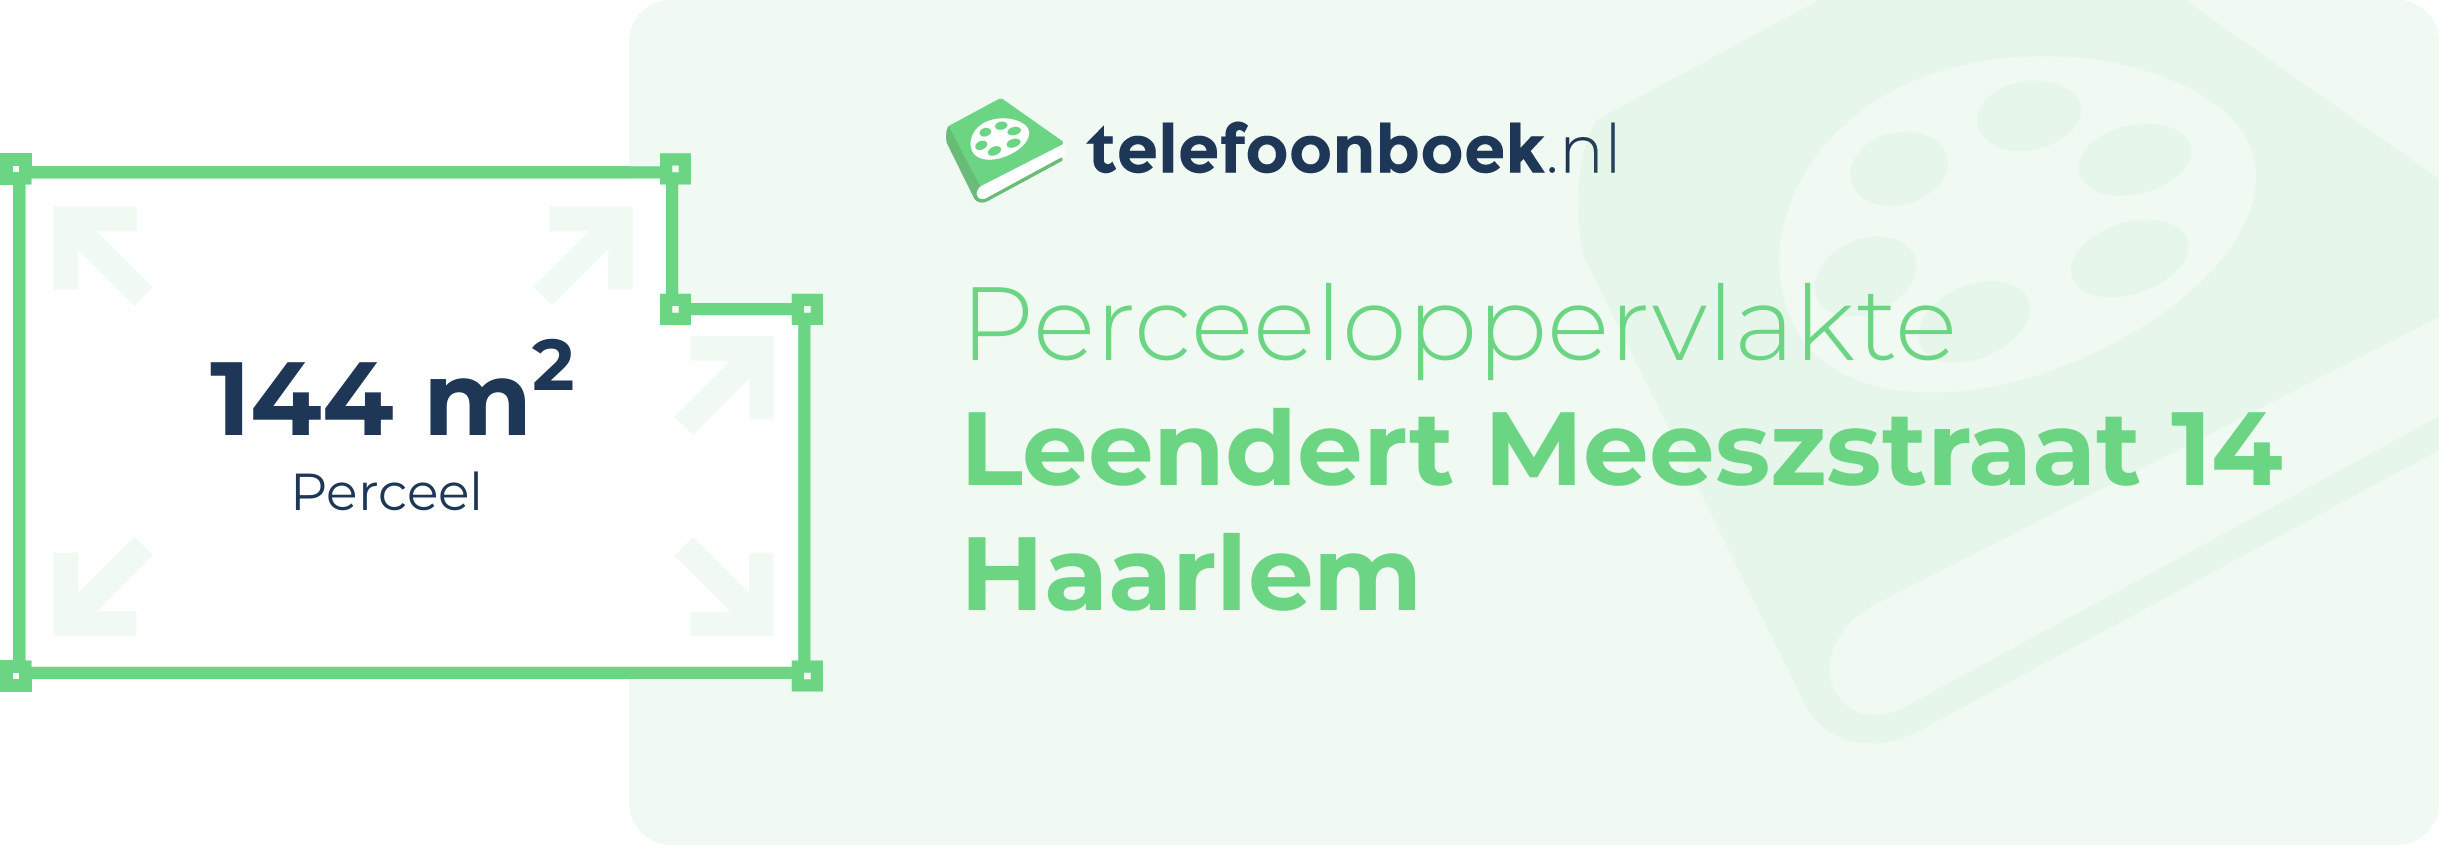 Perceeloppervlakte Leendert Meeszstraat 14 Haarlem